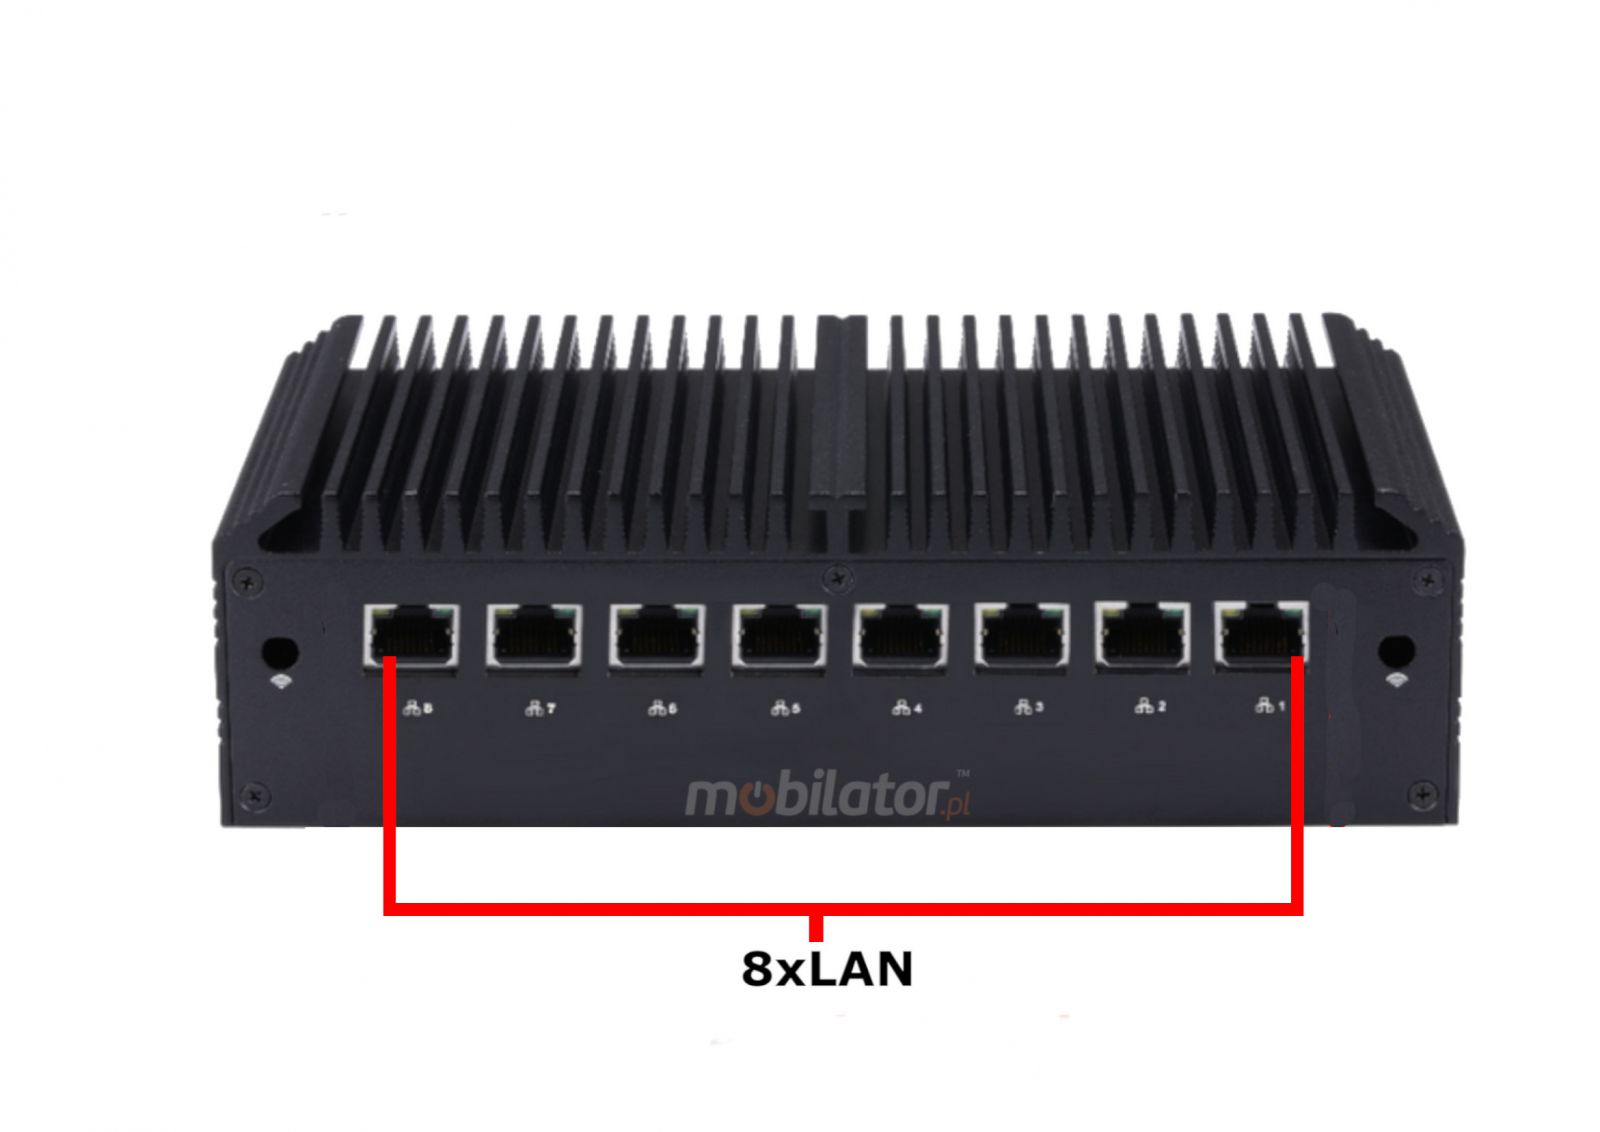 Q1012GE MiniPC with 8x LAN connections